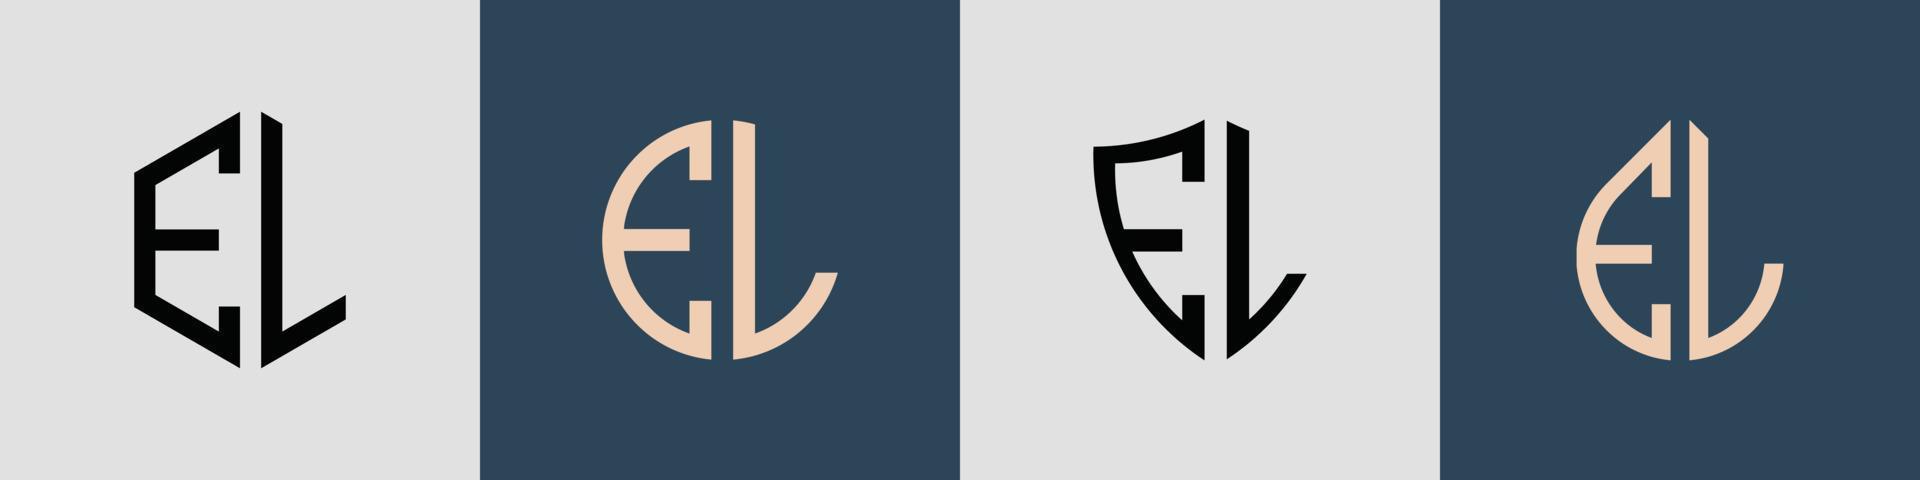 ensemble de conceptions de logo el de lettres initiales simples créatives. vecteur